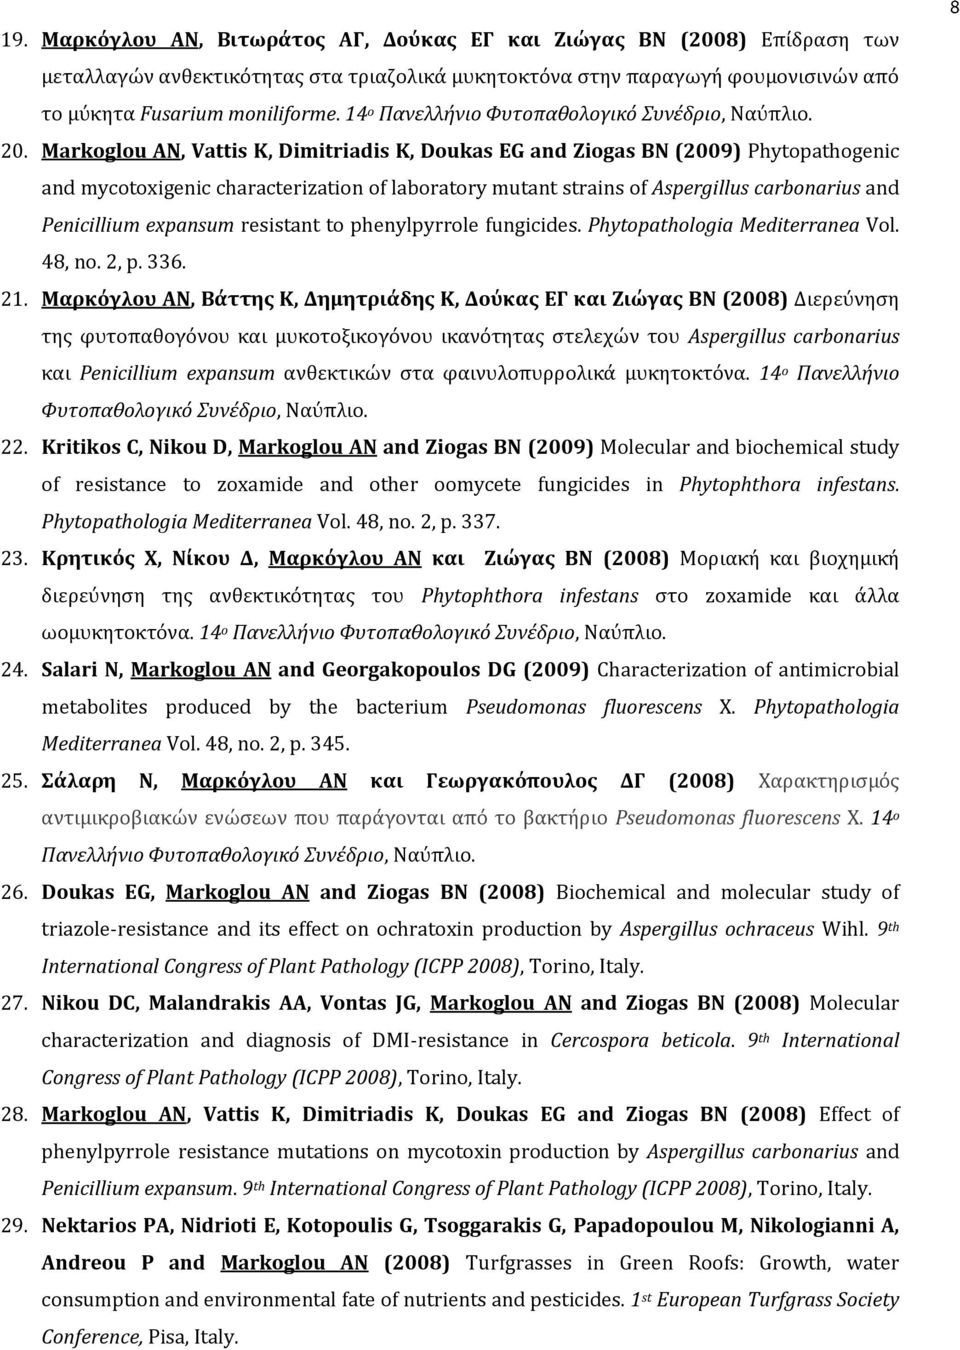 Markoglou AN, Vattis K, Dimitriadis K, Doukas EG and Ziogas BN (2009) Phytopathogenic and mycotoxigenic characterization of laboratory mutant strains of Aspergillus carbonarius and Penicillium